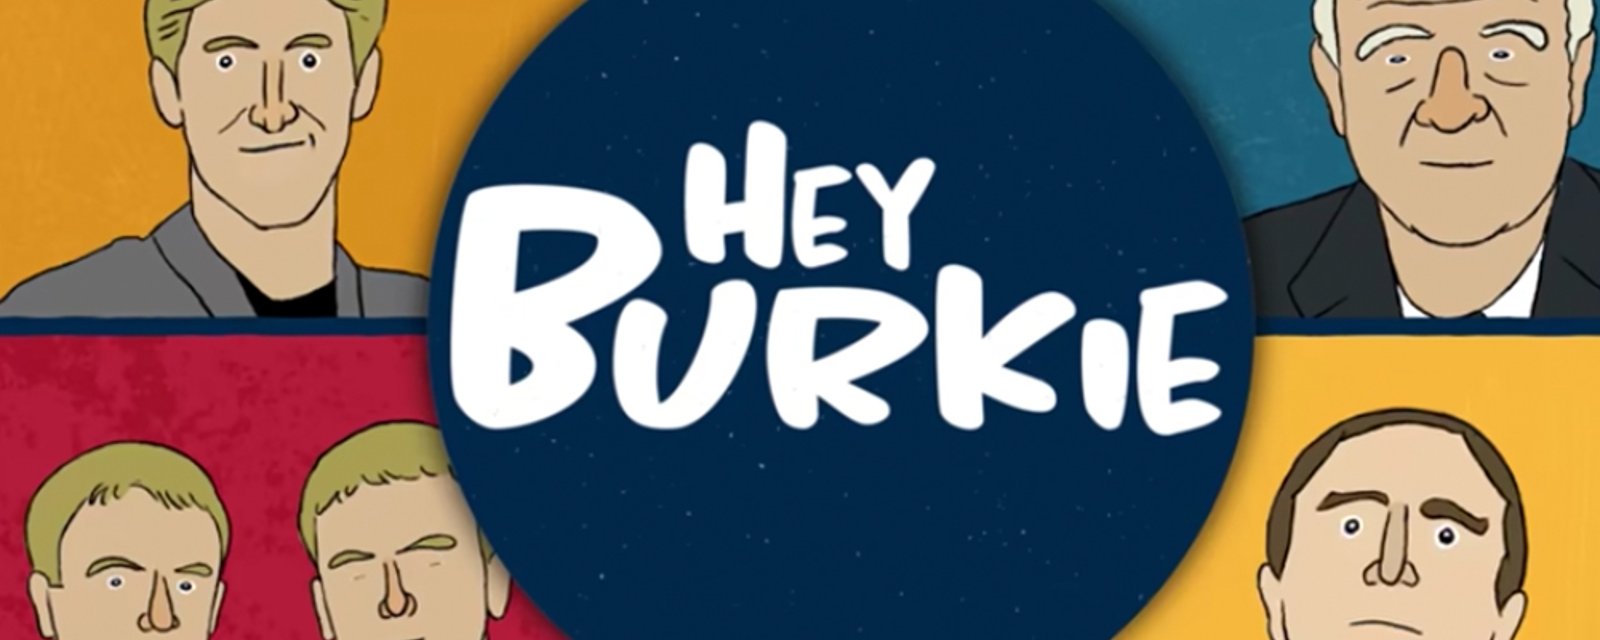 Sportsnet's 'Hey Burkie' animated series is the perfect summer binge Youtube series